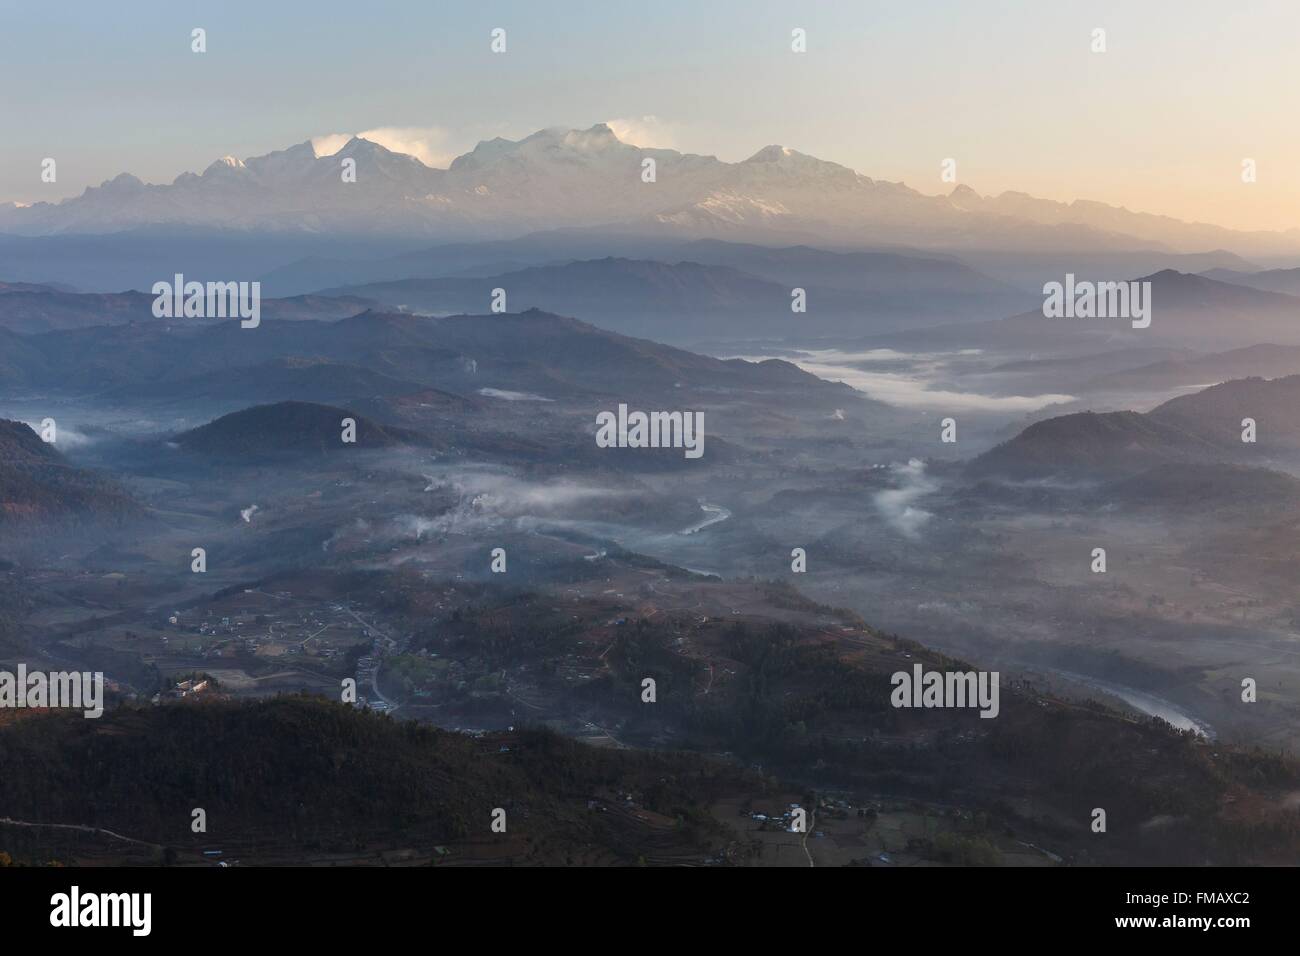 Nepal, Gandaki zone, Bandipur, Himalaya mountains and mist in the valley at sunrise Stock Photo